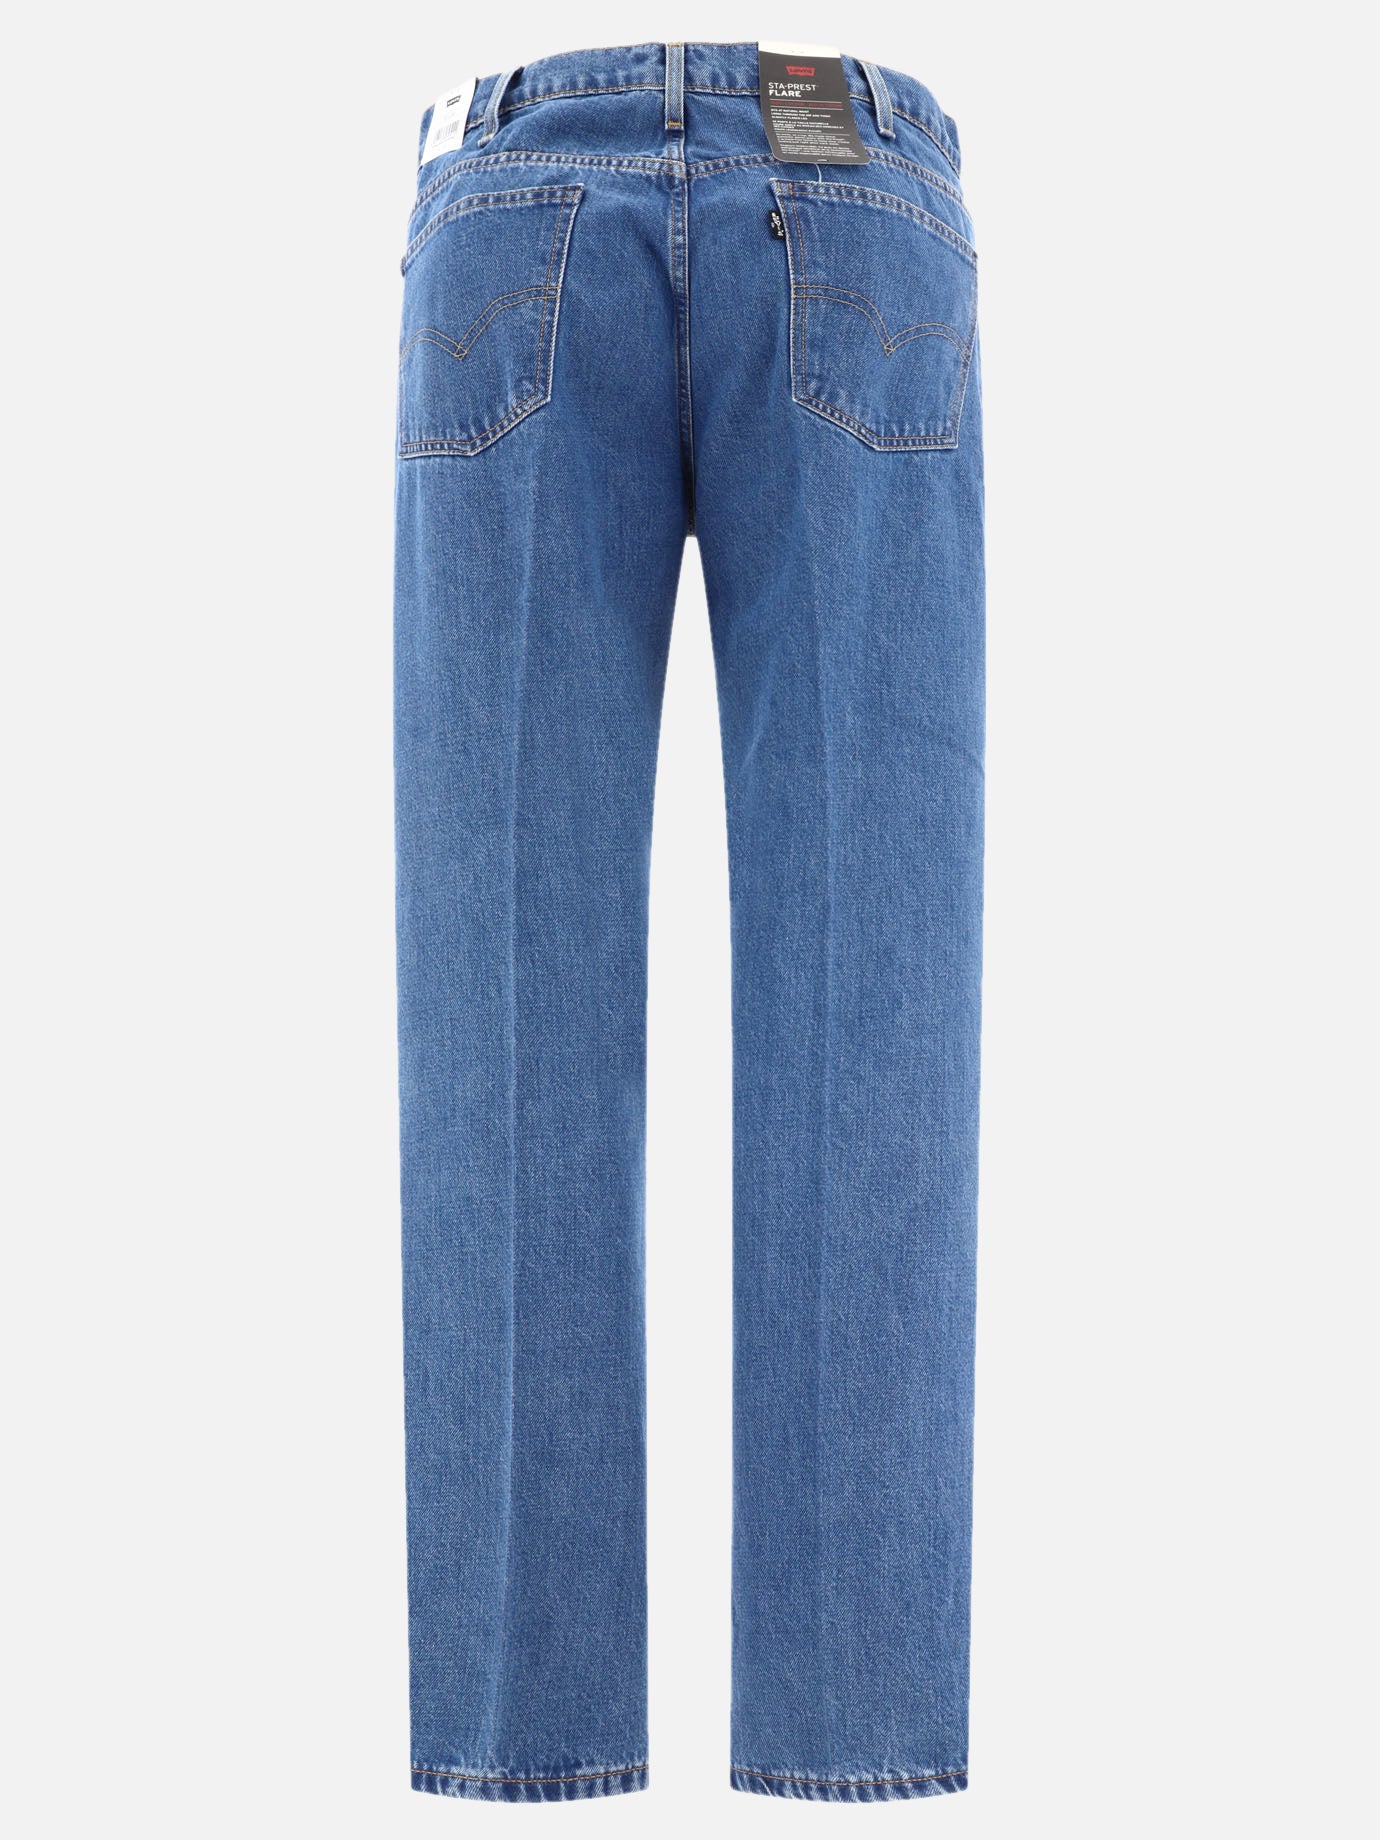 "Sta-prest®" jeans